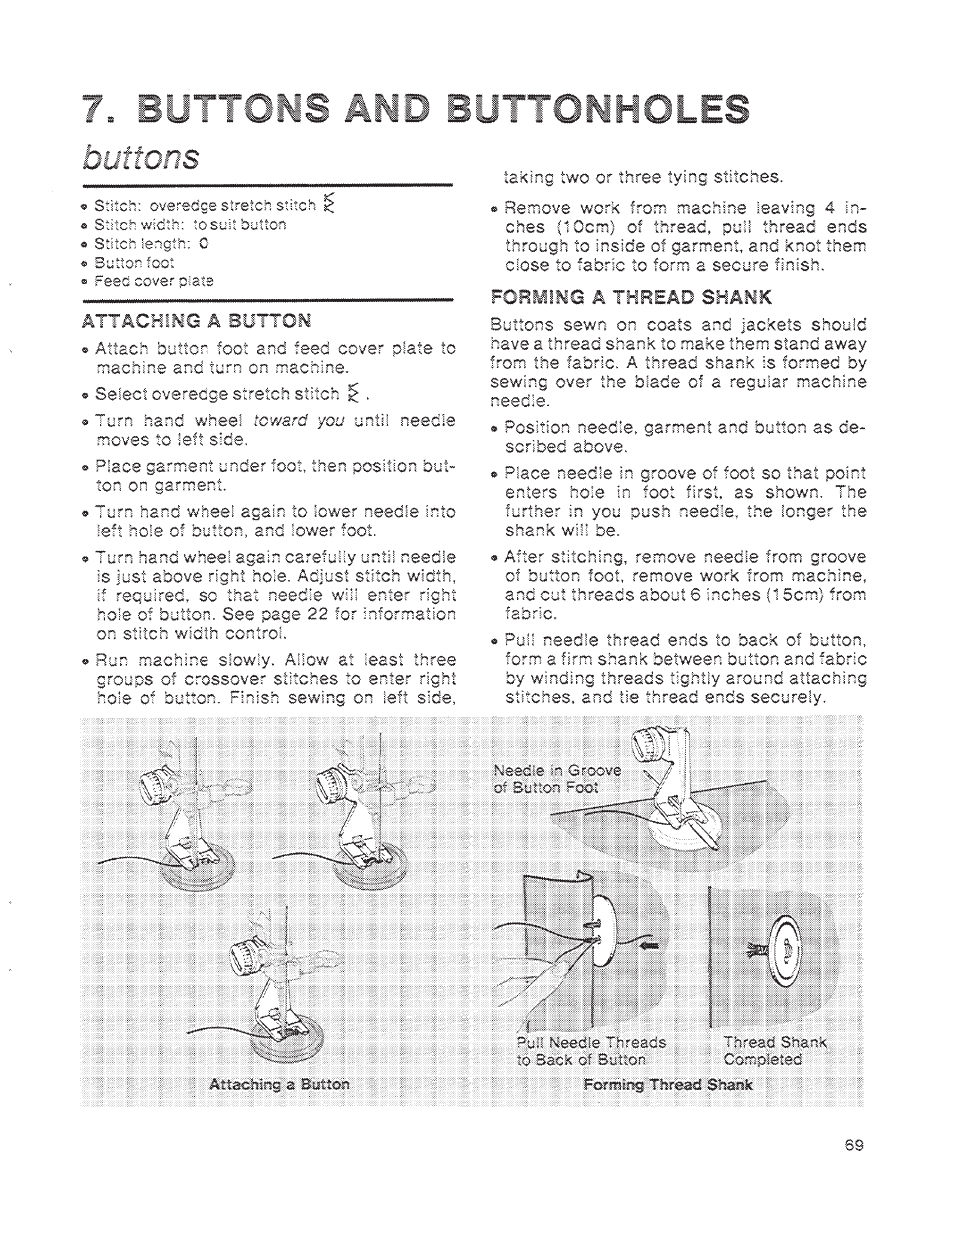 Attachimg a brnroh, Fonmmb a thread shahk, Shianki | SINGER 1200 Athena User Manual | Page 71 / 90